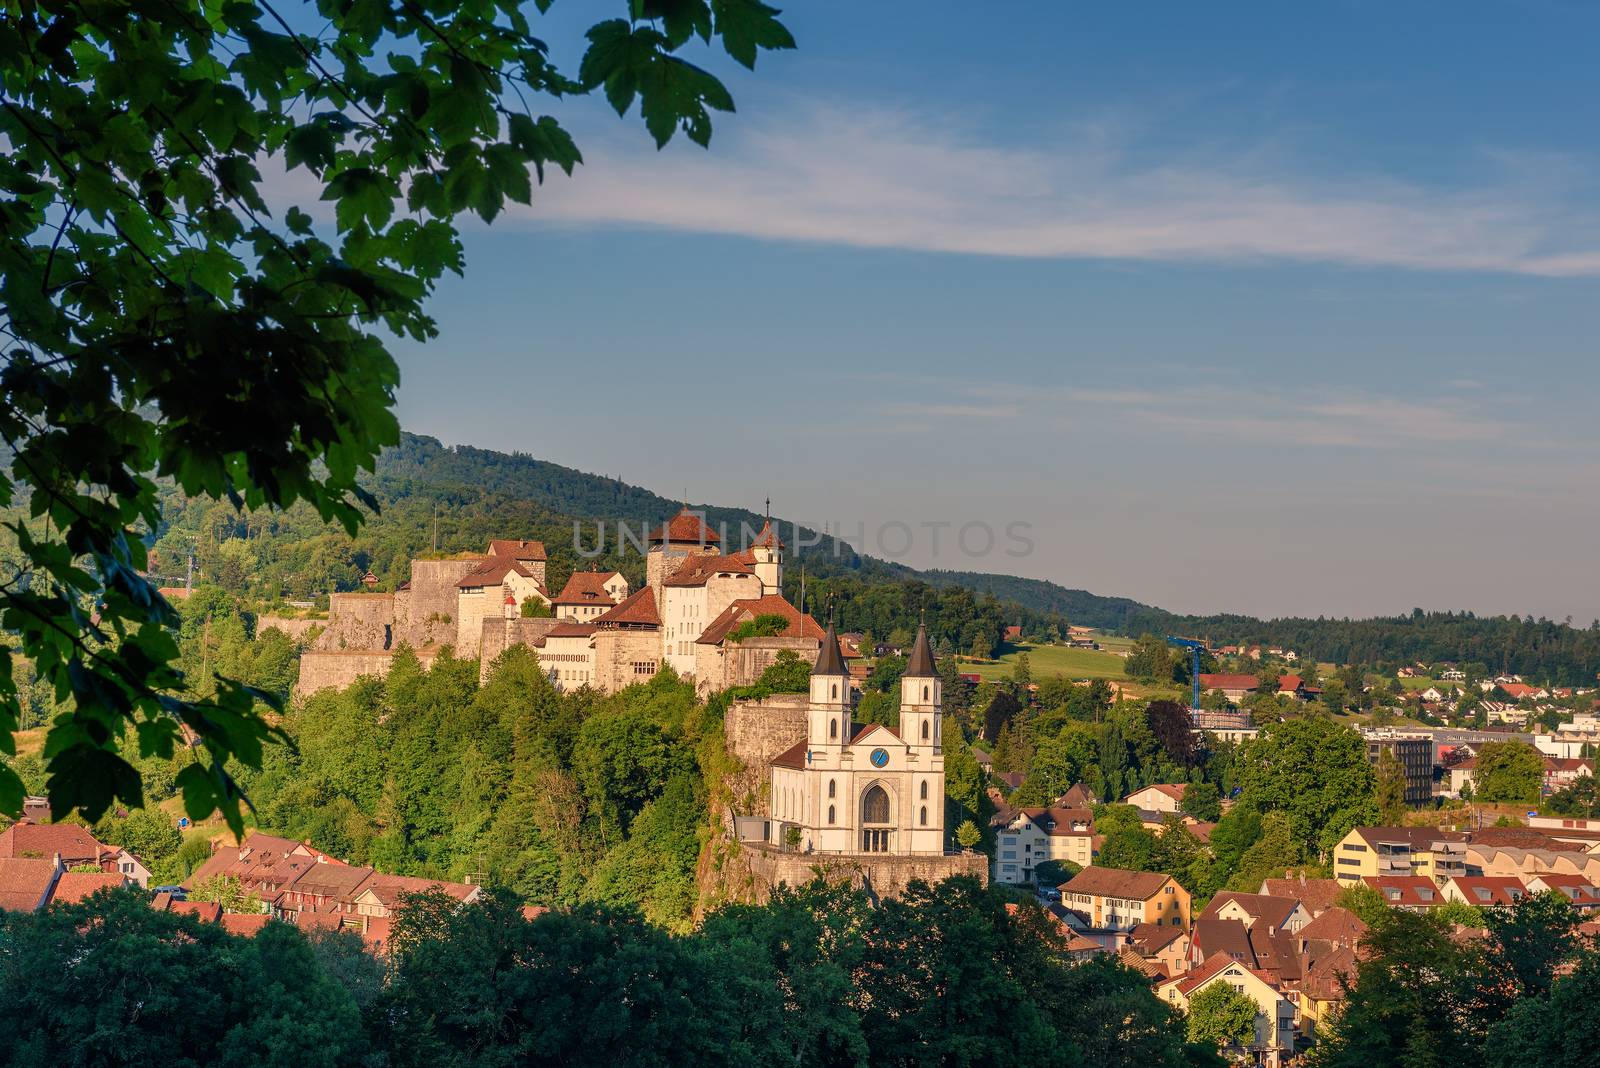 Cityscape of Aarburg and the medieval Aarburg Castle in the canton of Aargau in Switzerland